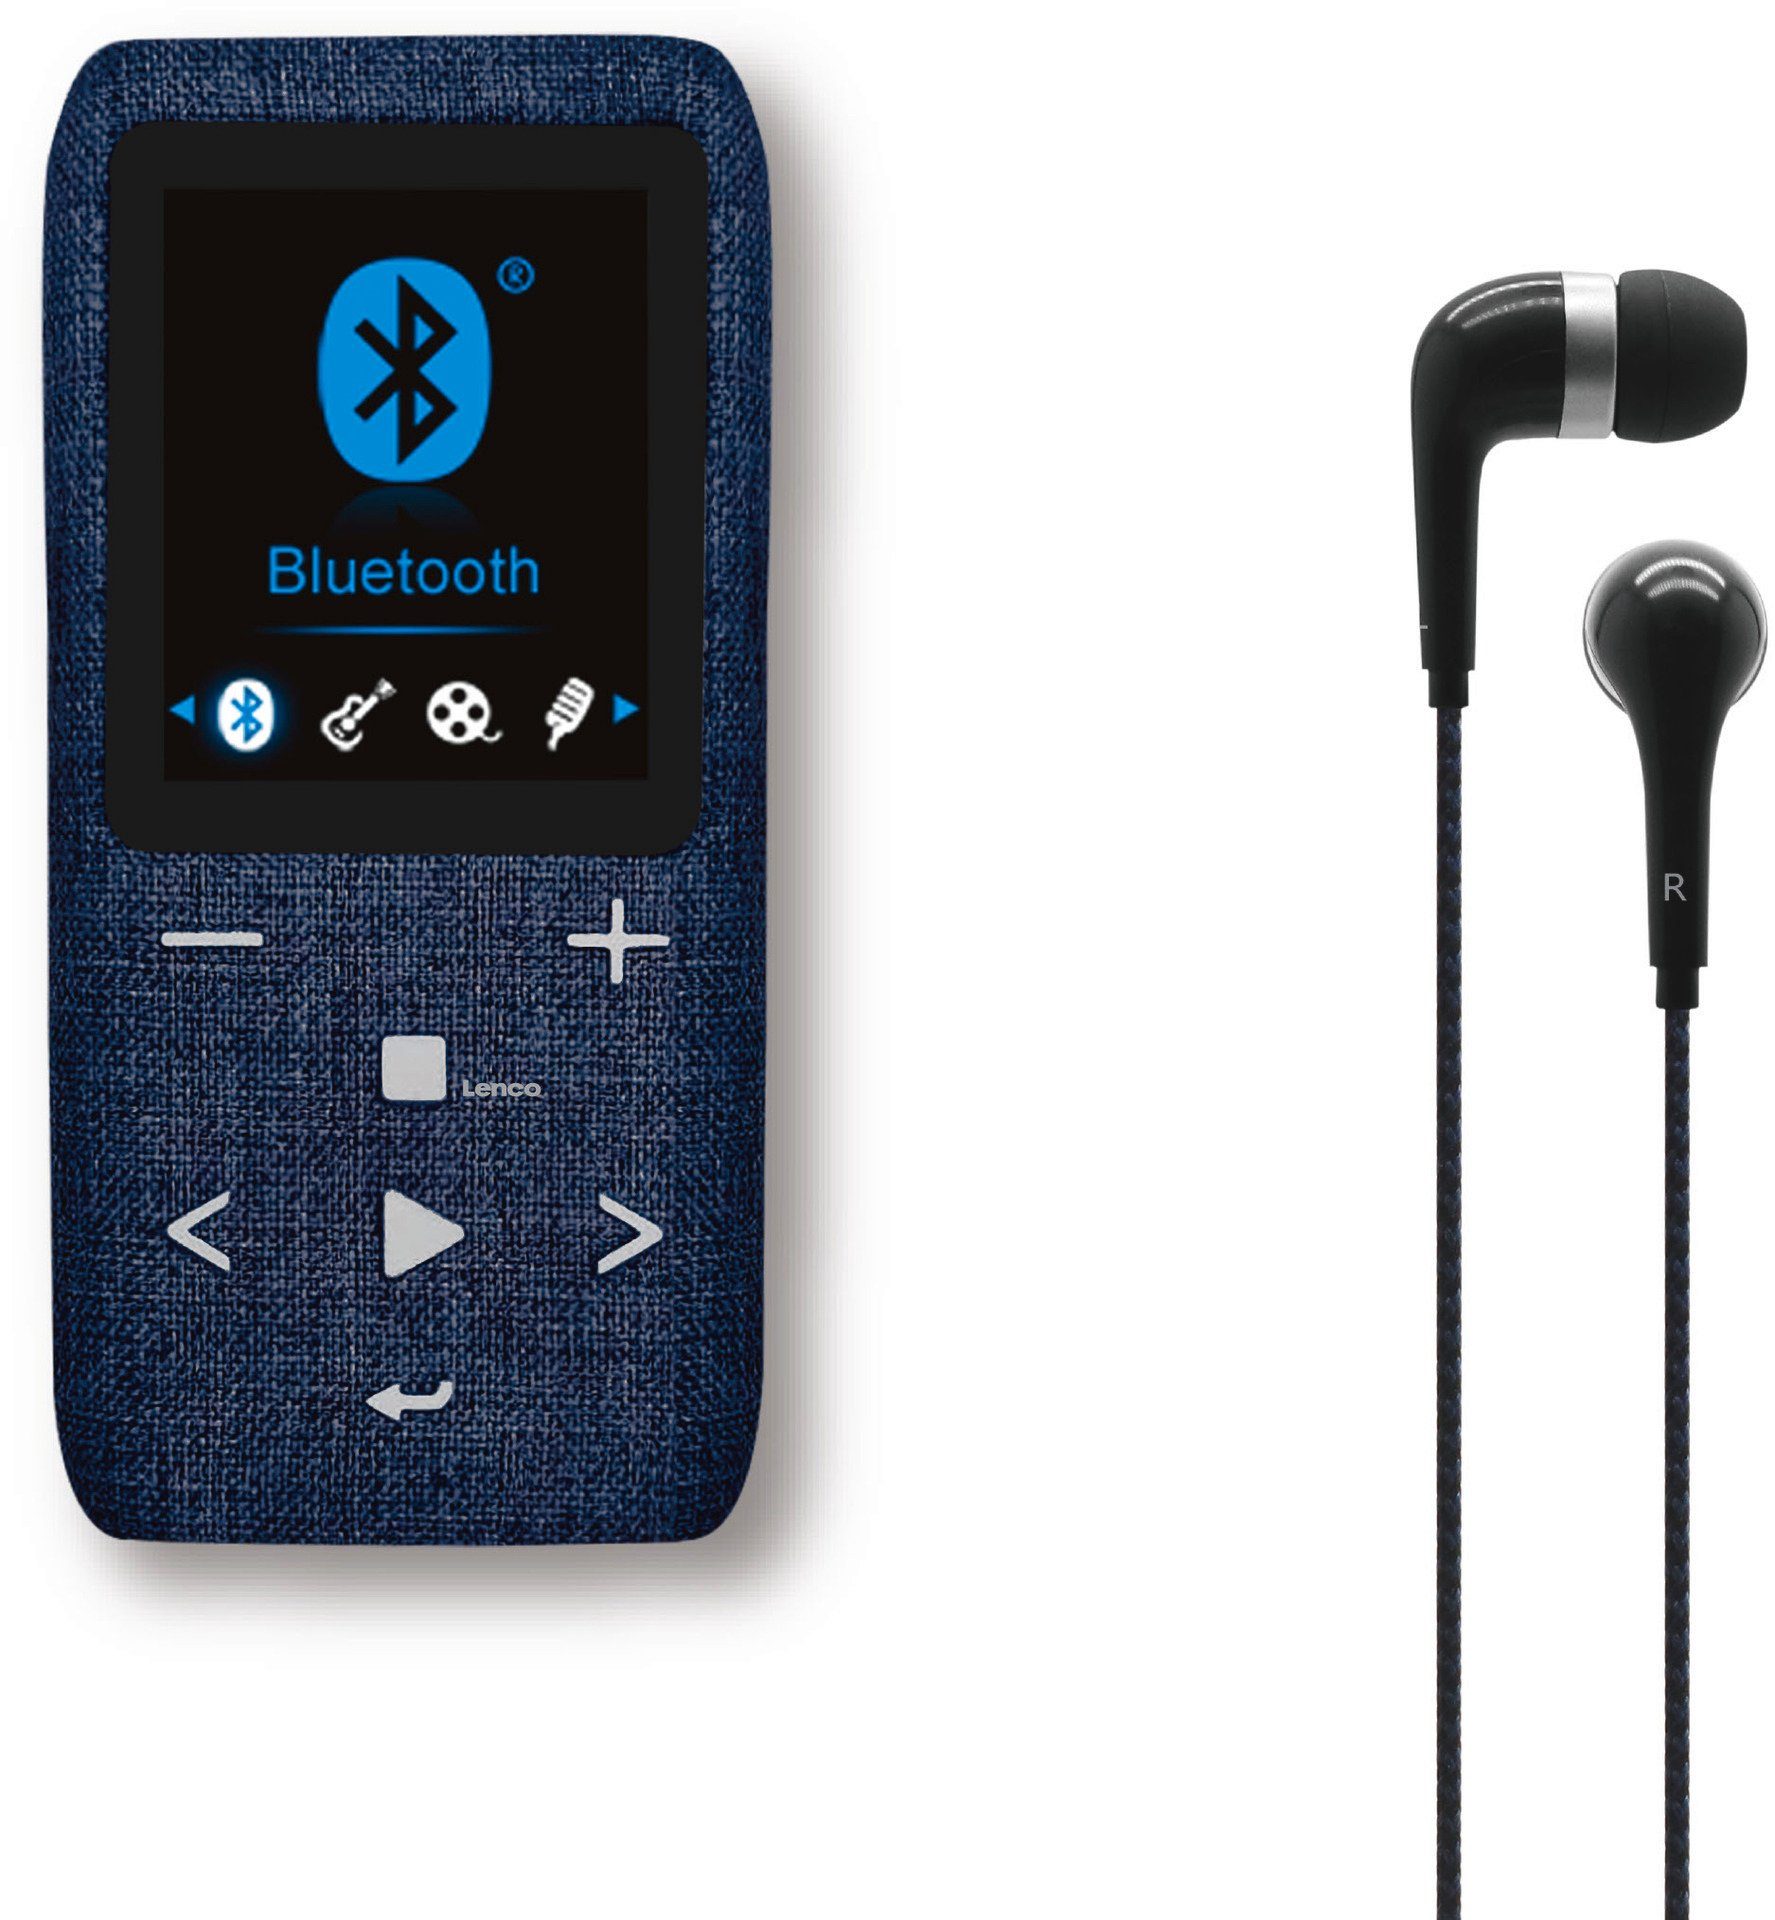 Lenco Xemio-861 MP3-Player (8 GB)